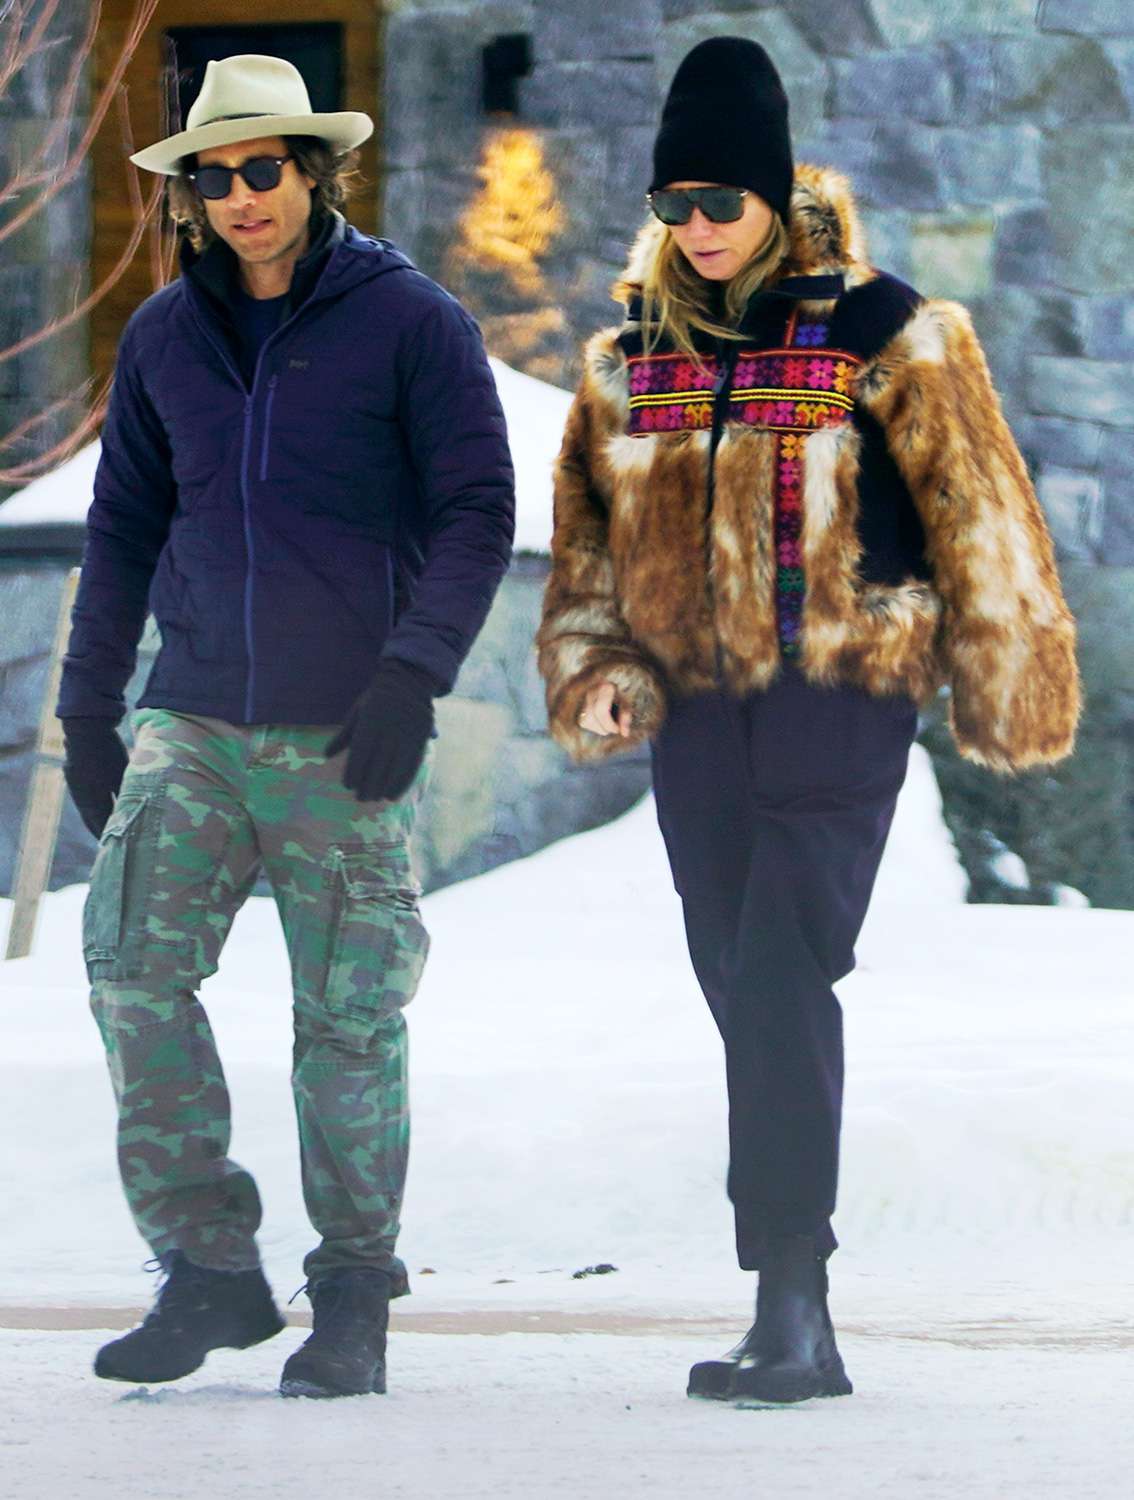 Gwyneth Paltrow and Brad Falchuk take a walk in town in Aspen, Colorado